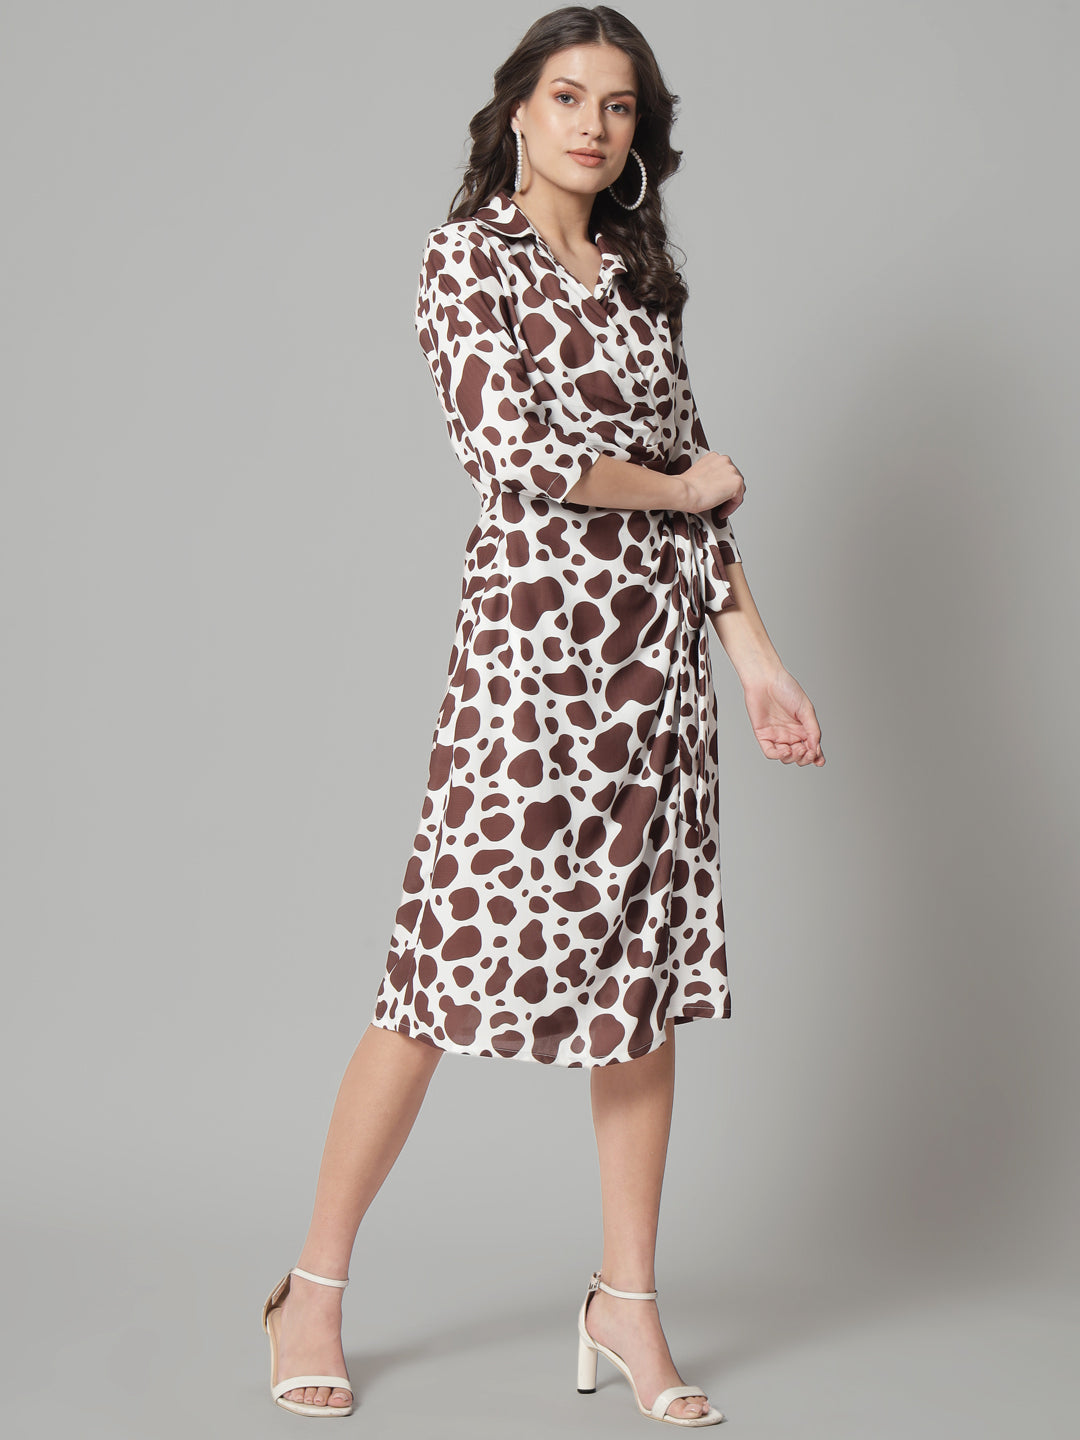 Wrap Around Animal Print Dress - Brown & White